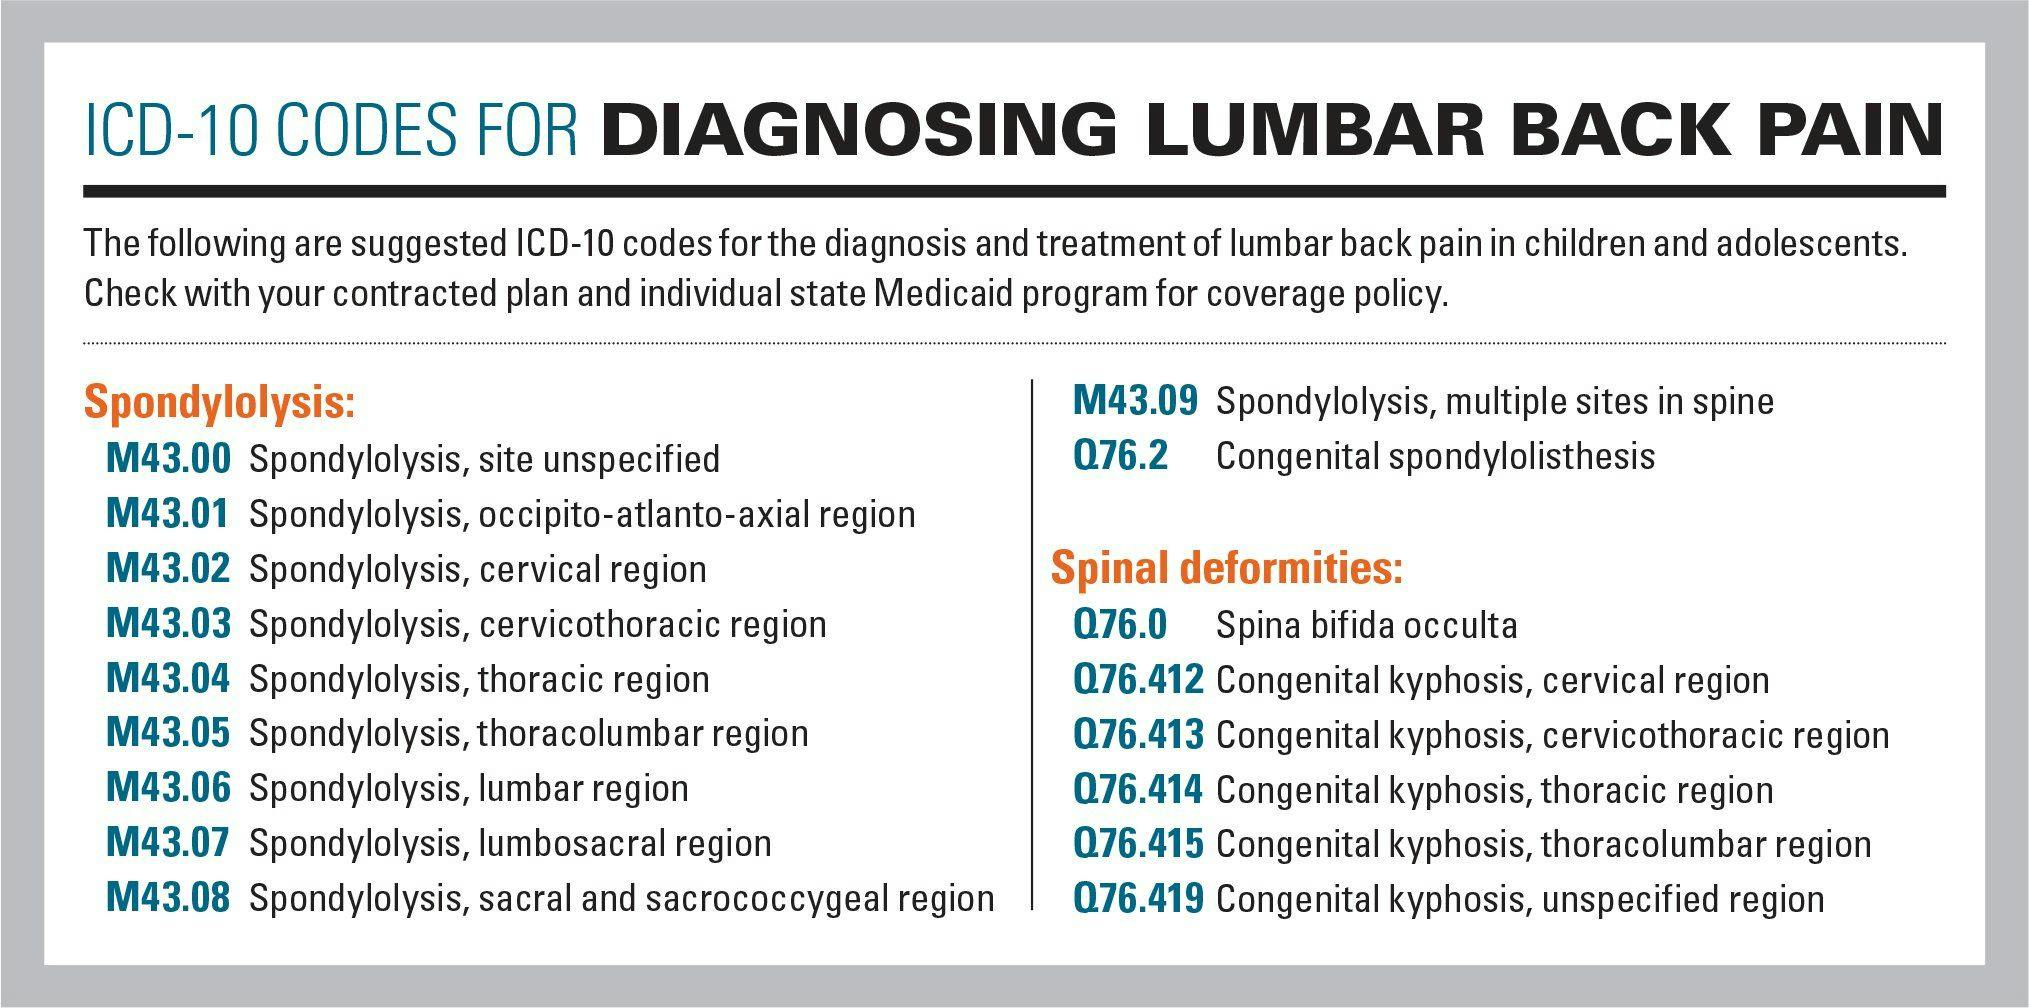 ICD-10 codes for diagnosing lumbar back pain